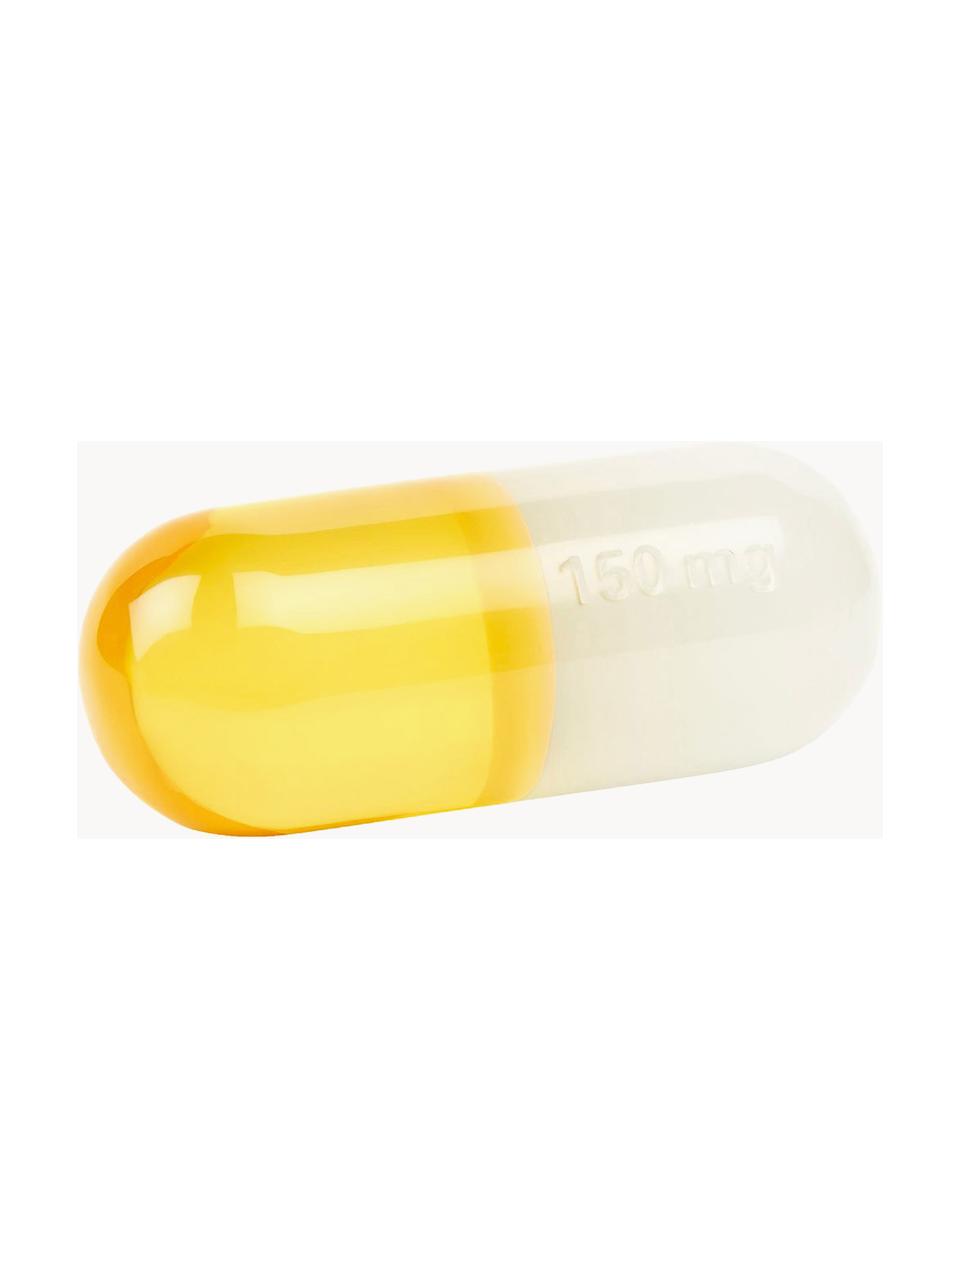 Pieza decorativa Pill, Poliacrílico pulido, Blanco, amarillo limón, An 17 x Al 6 cm